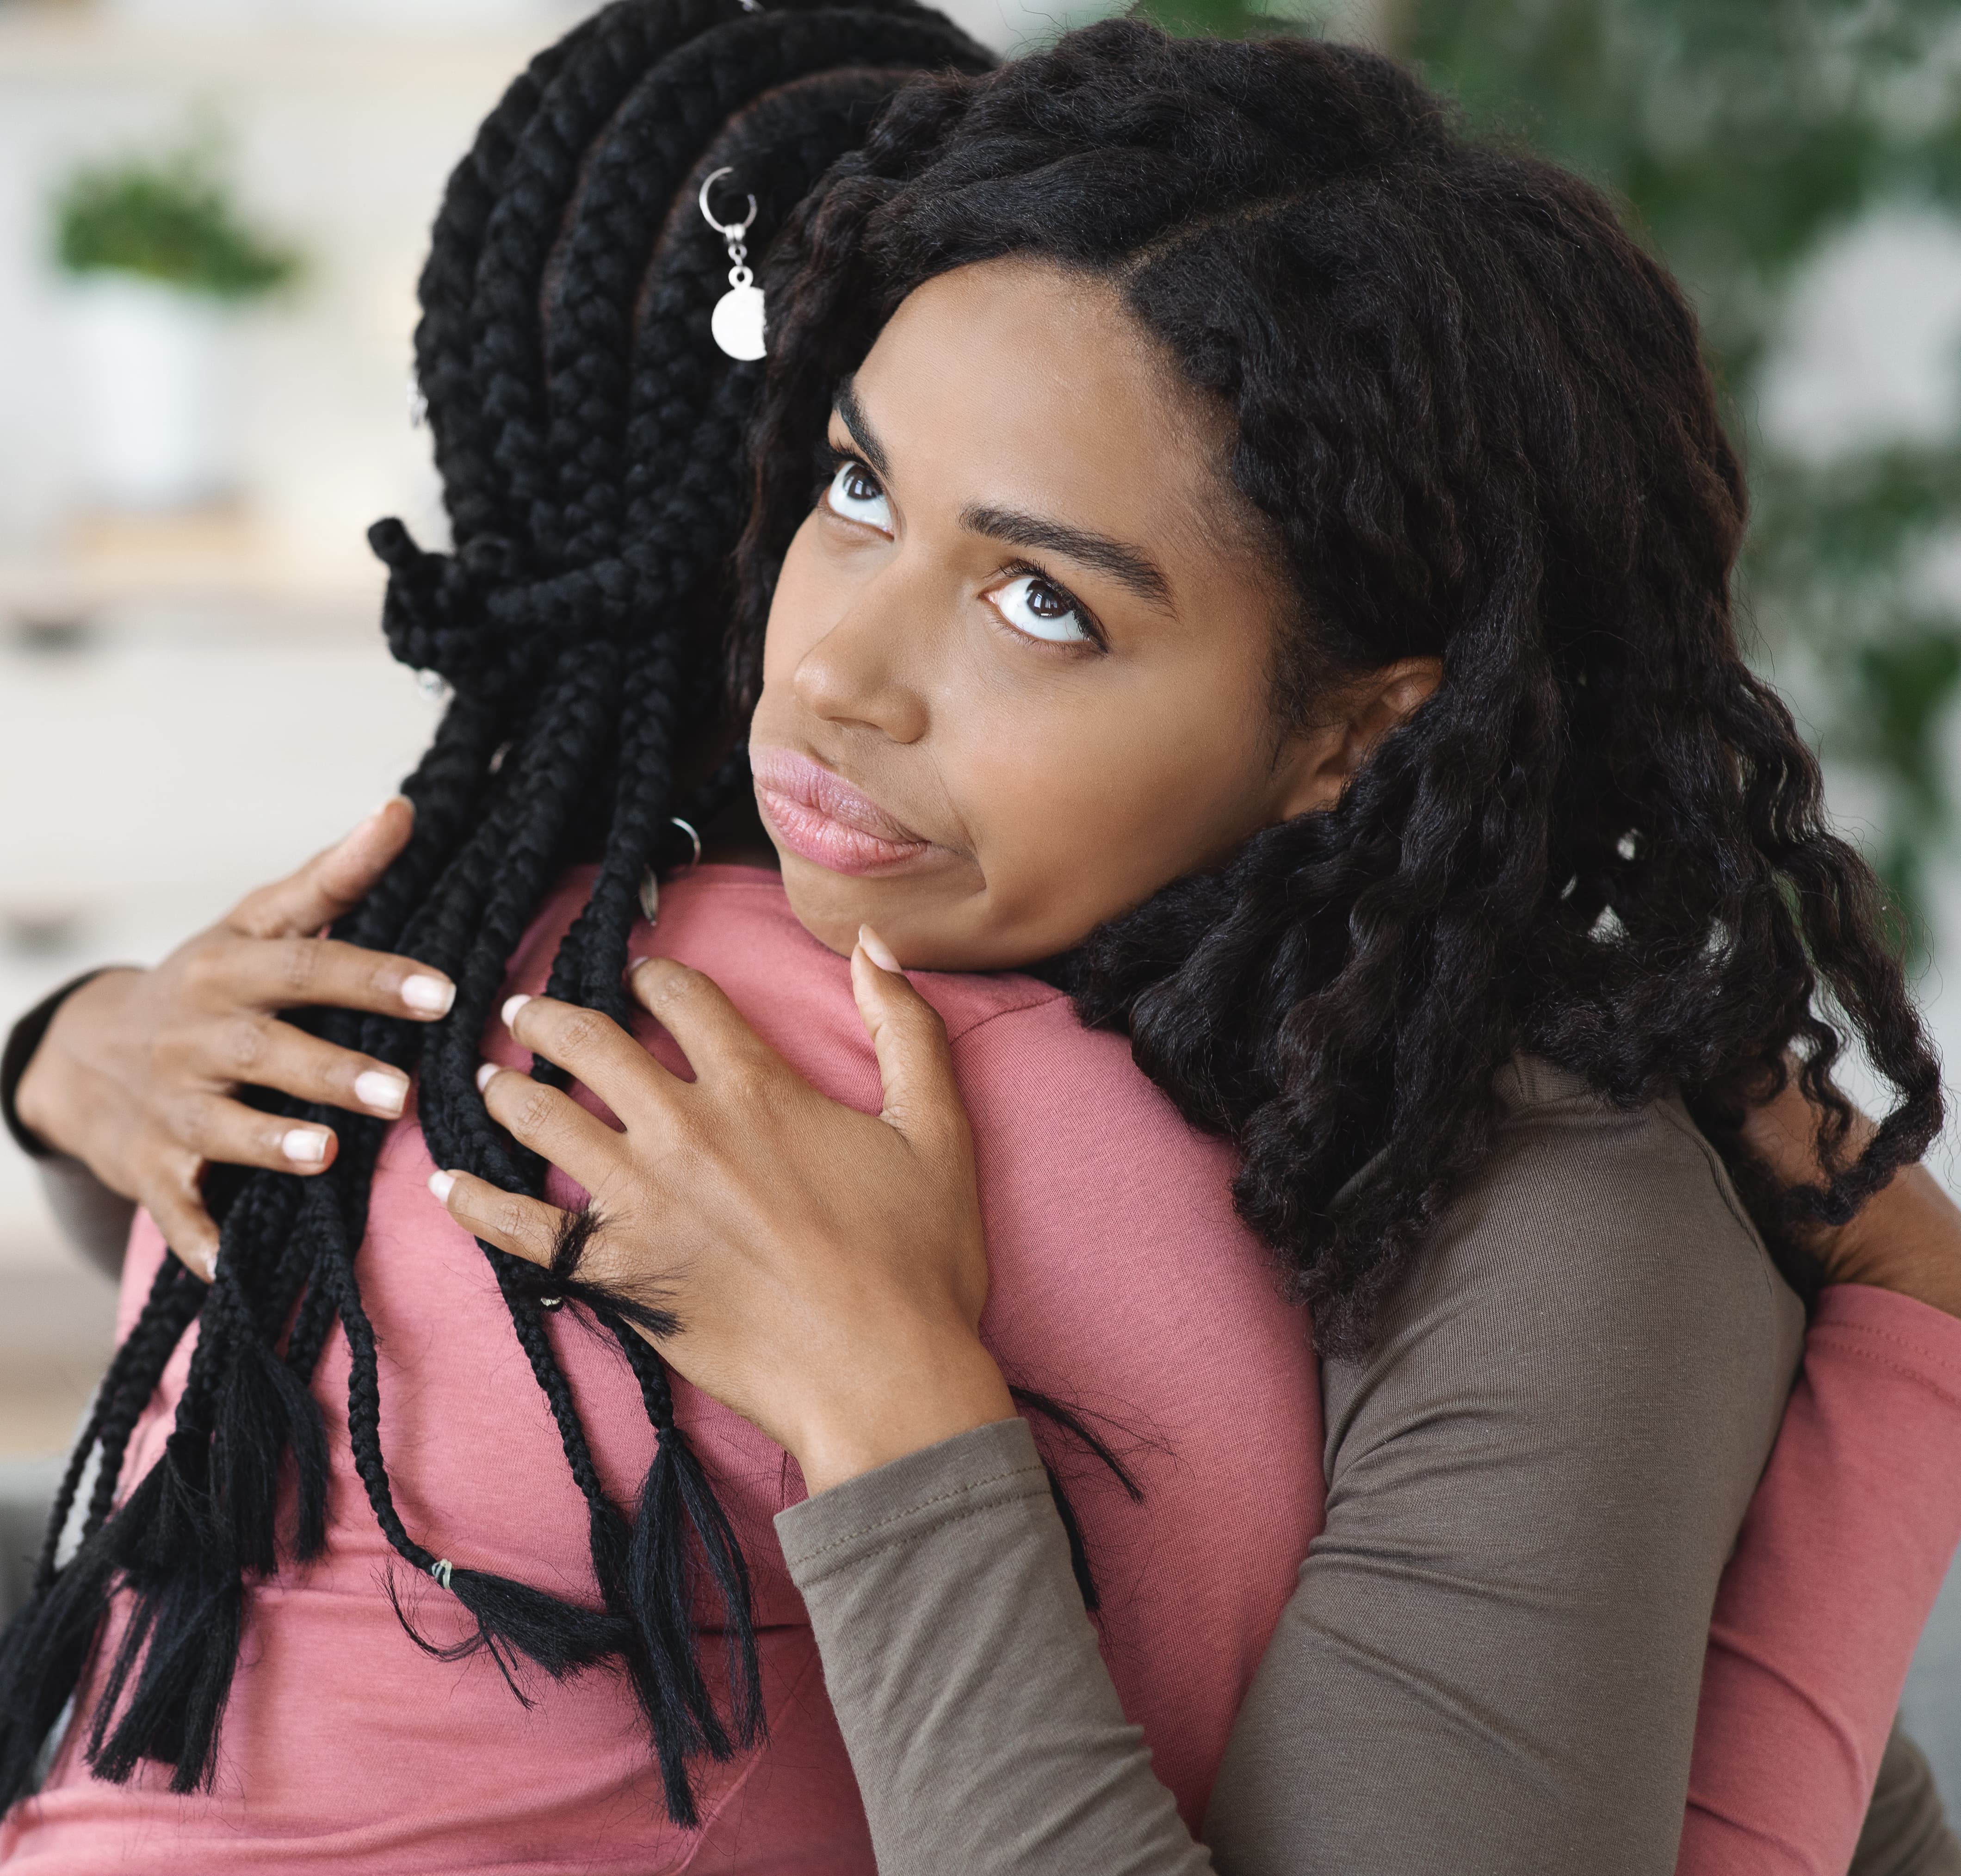 Irritated black lady hugging her girlfriend, fake friendship